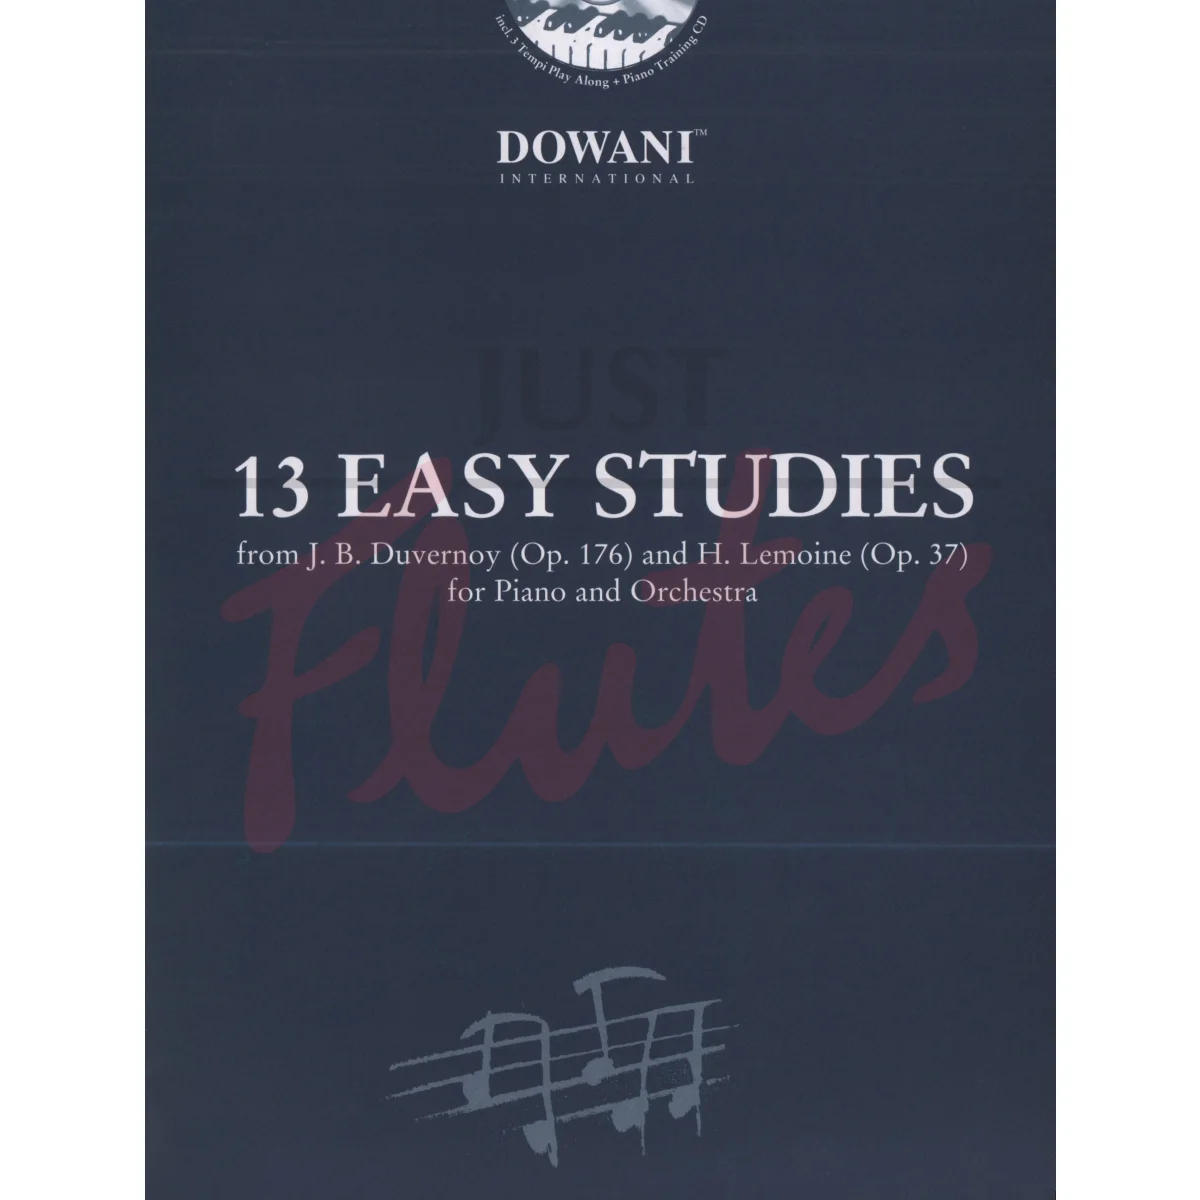 13 Easy Studies for Piano